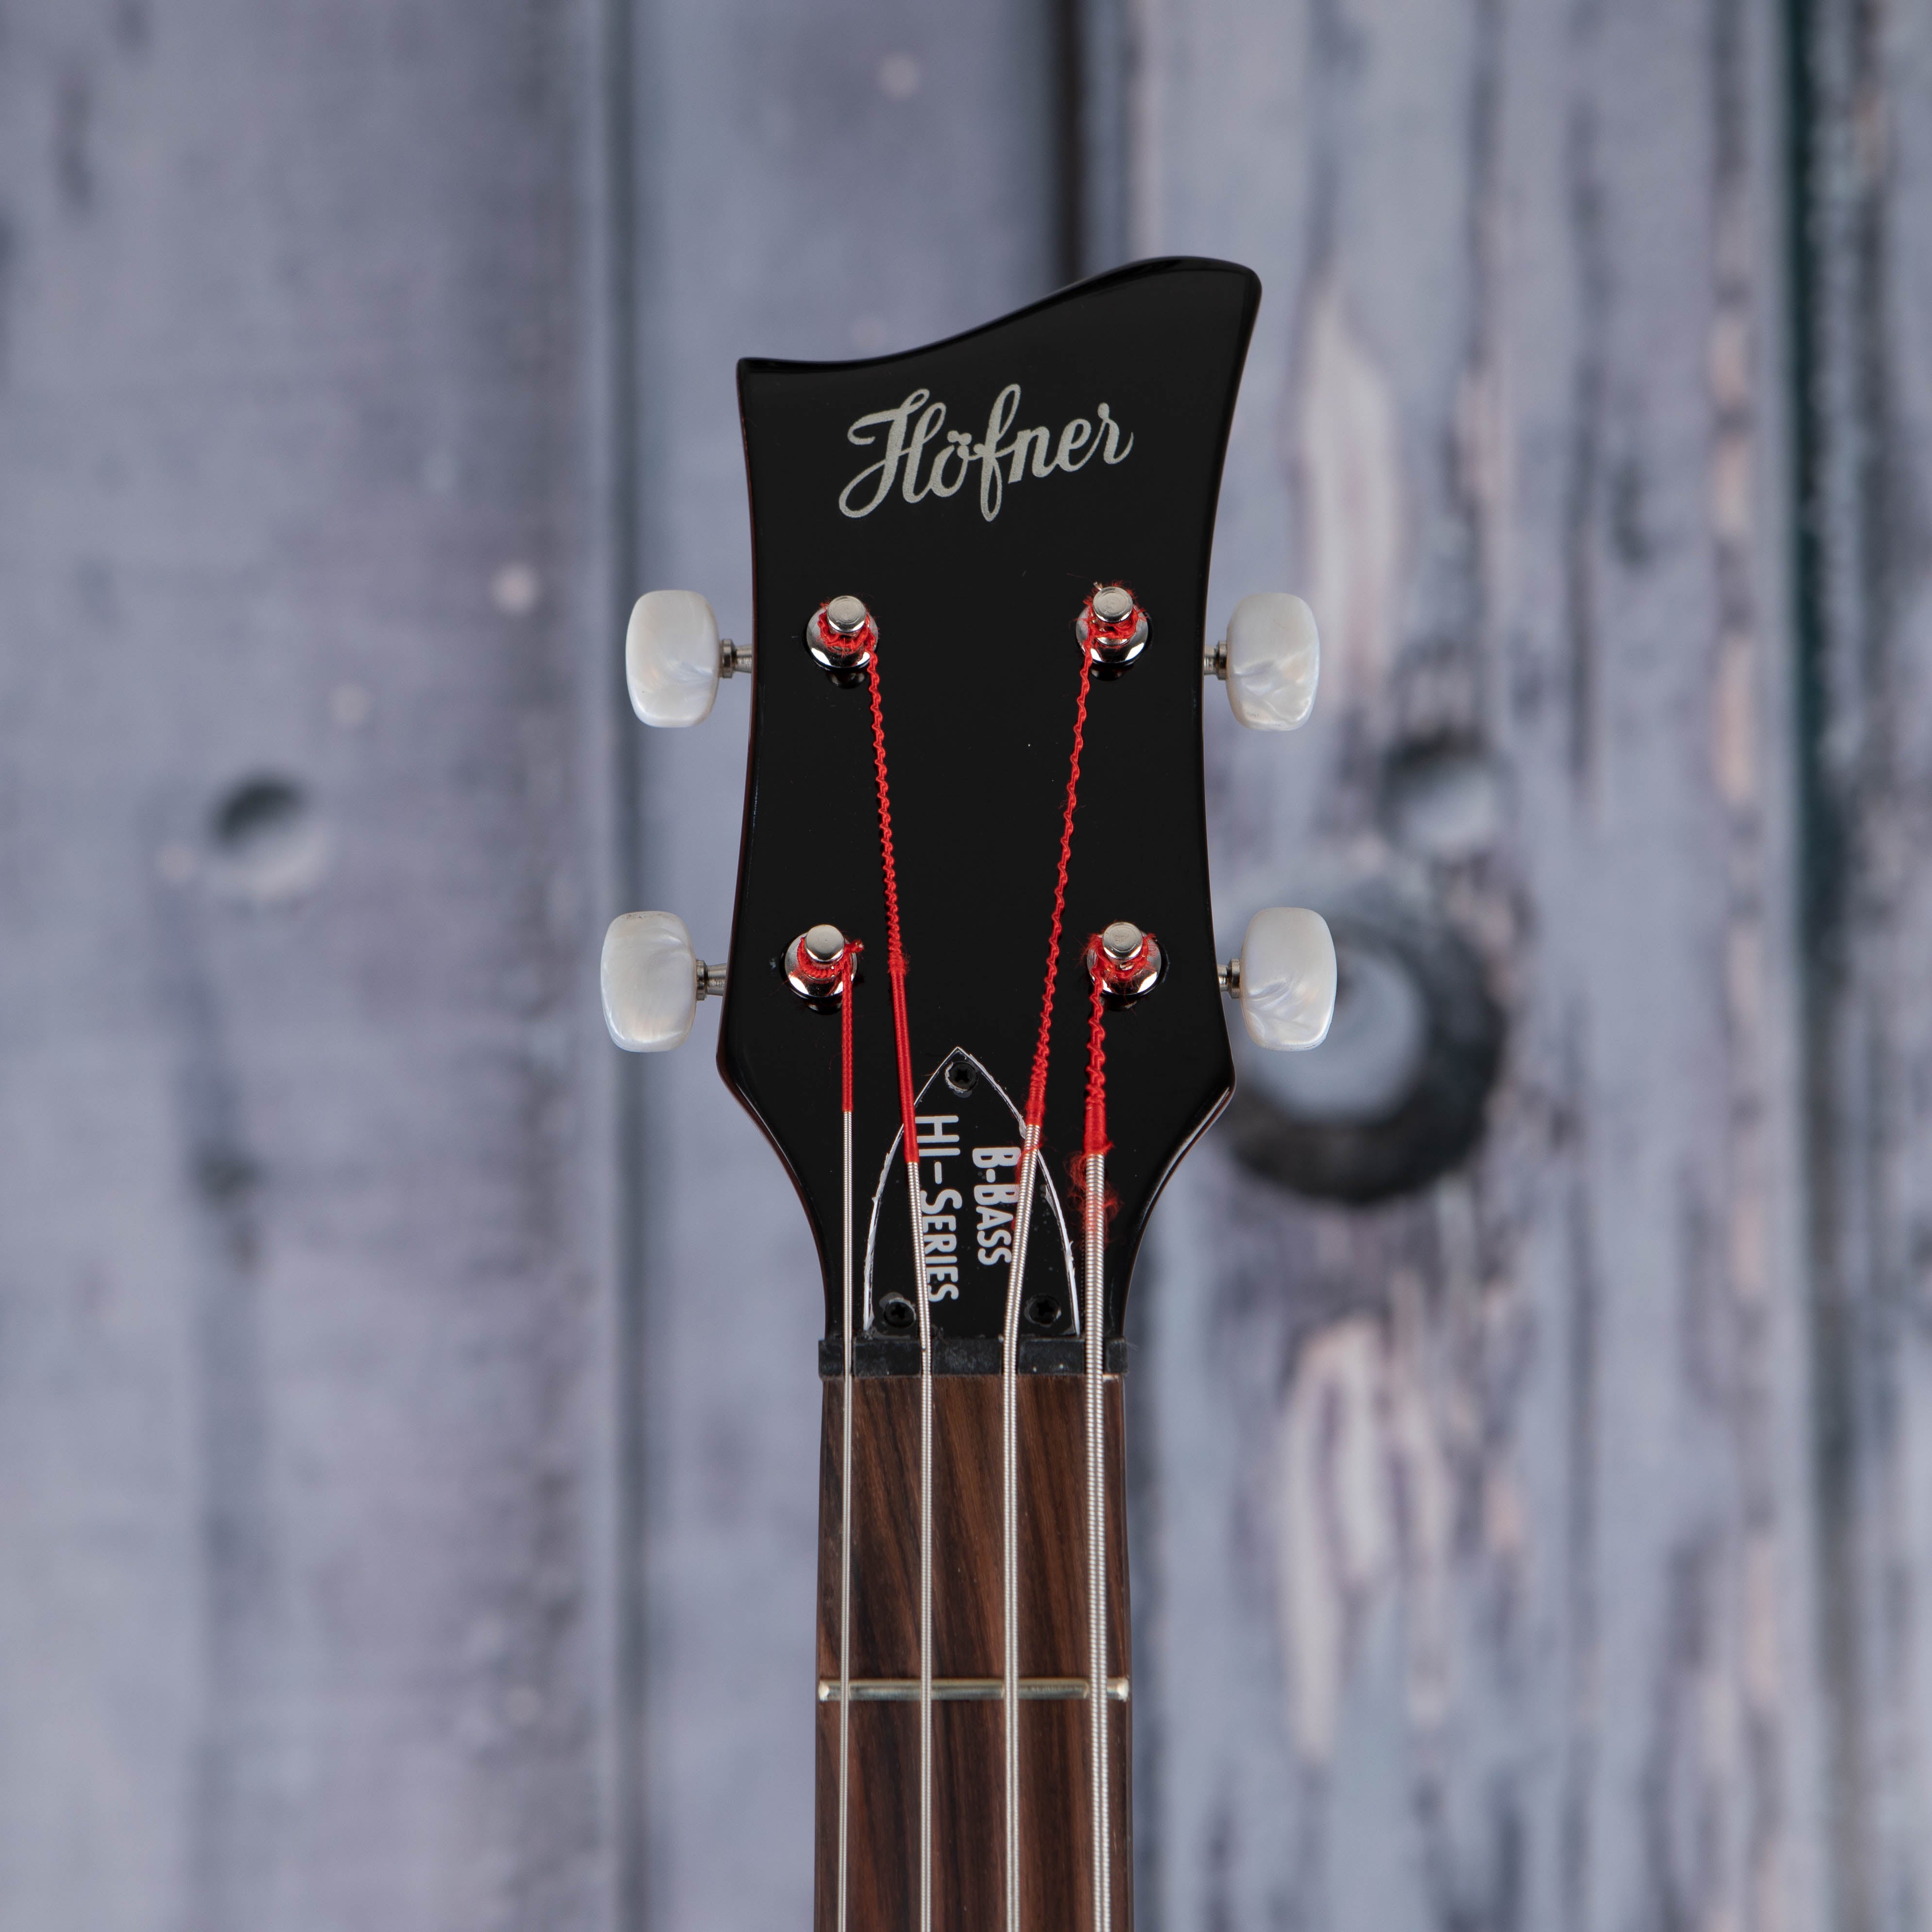 Höfner Ignition PRO Left-Handed Violin Bass Guitar, Sunburst, front headstock